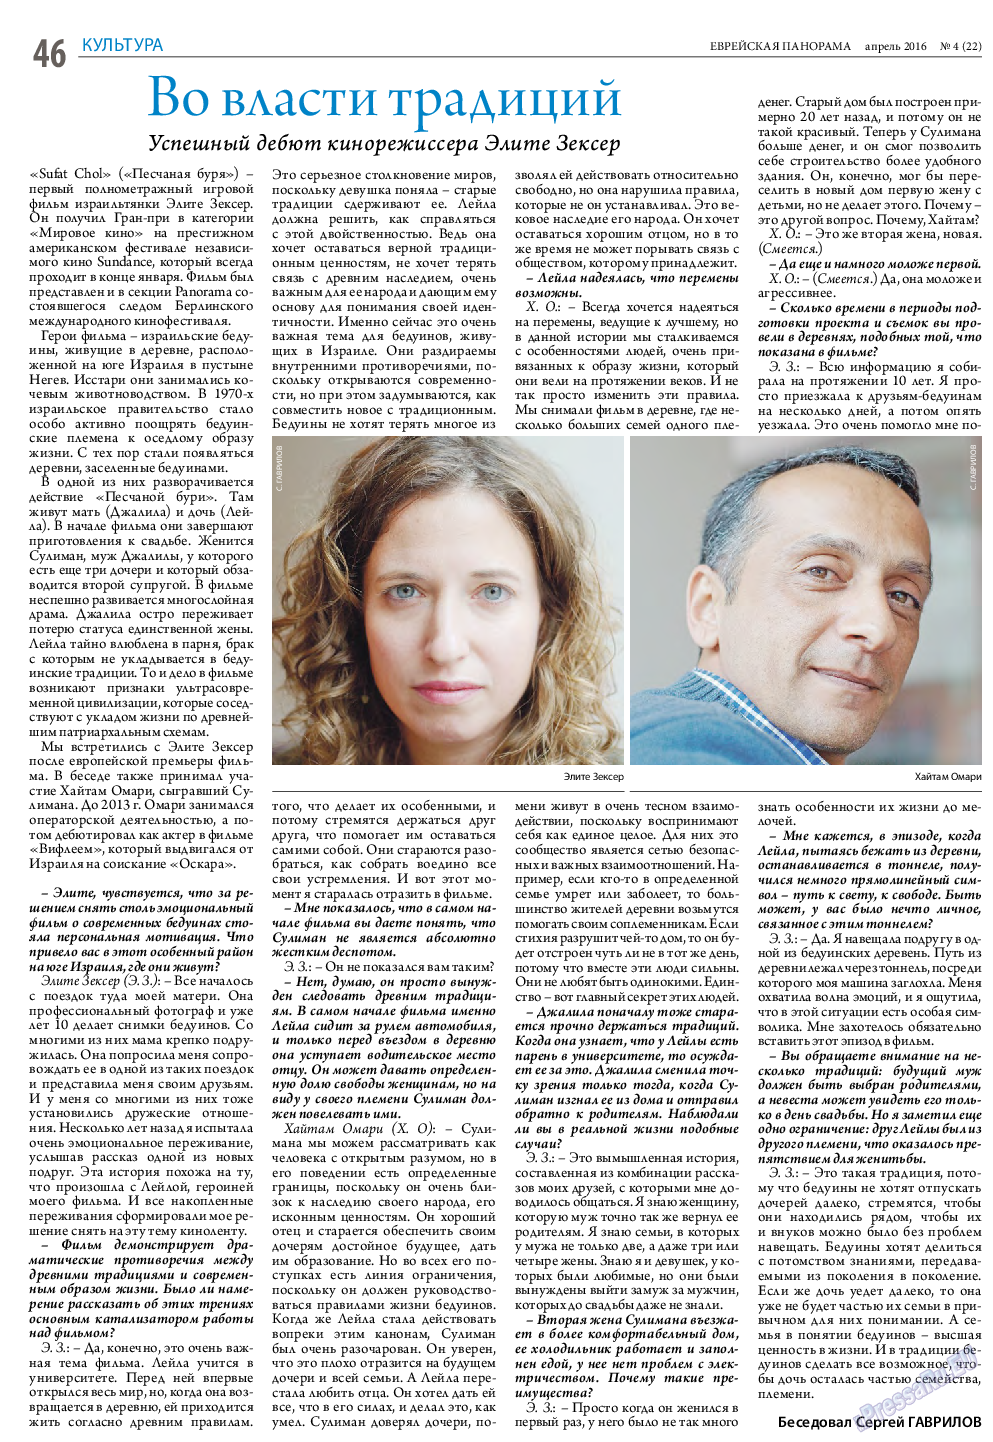 Еврейская панорама, газета. 2016 №4 стр.46